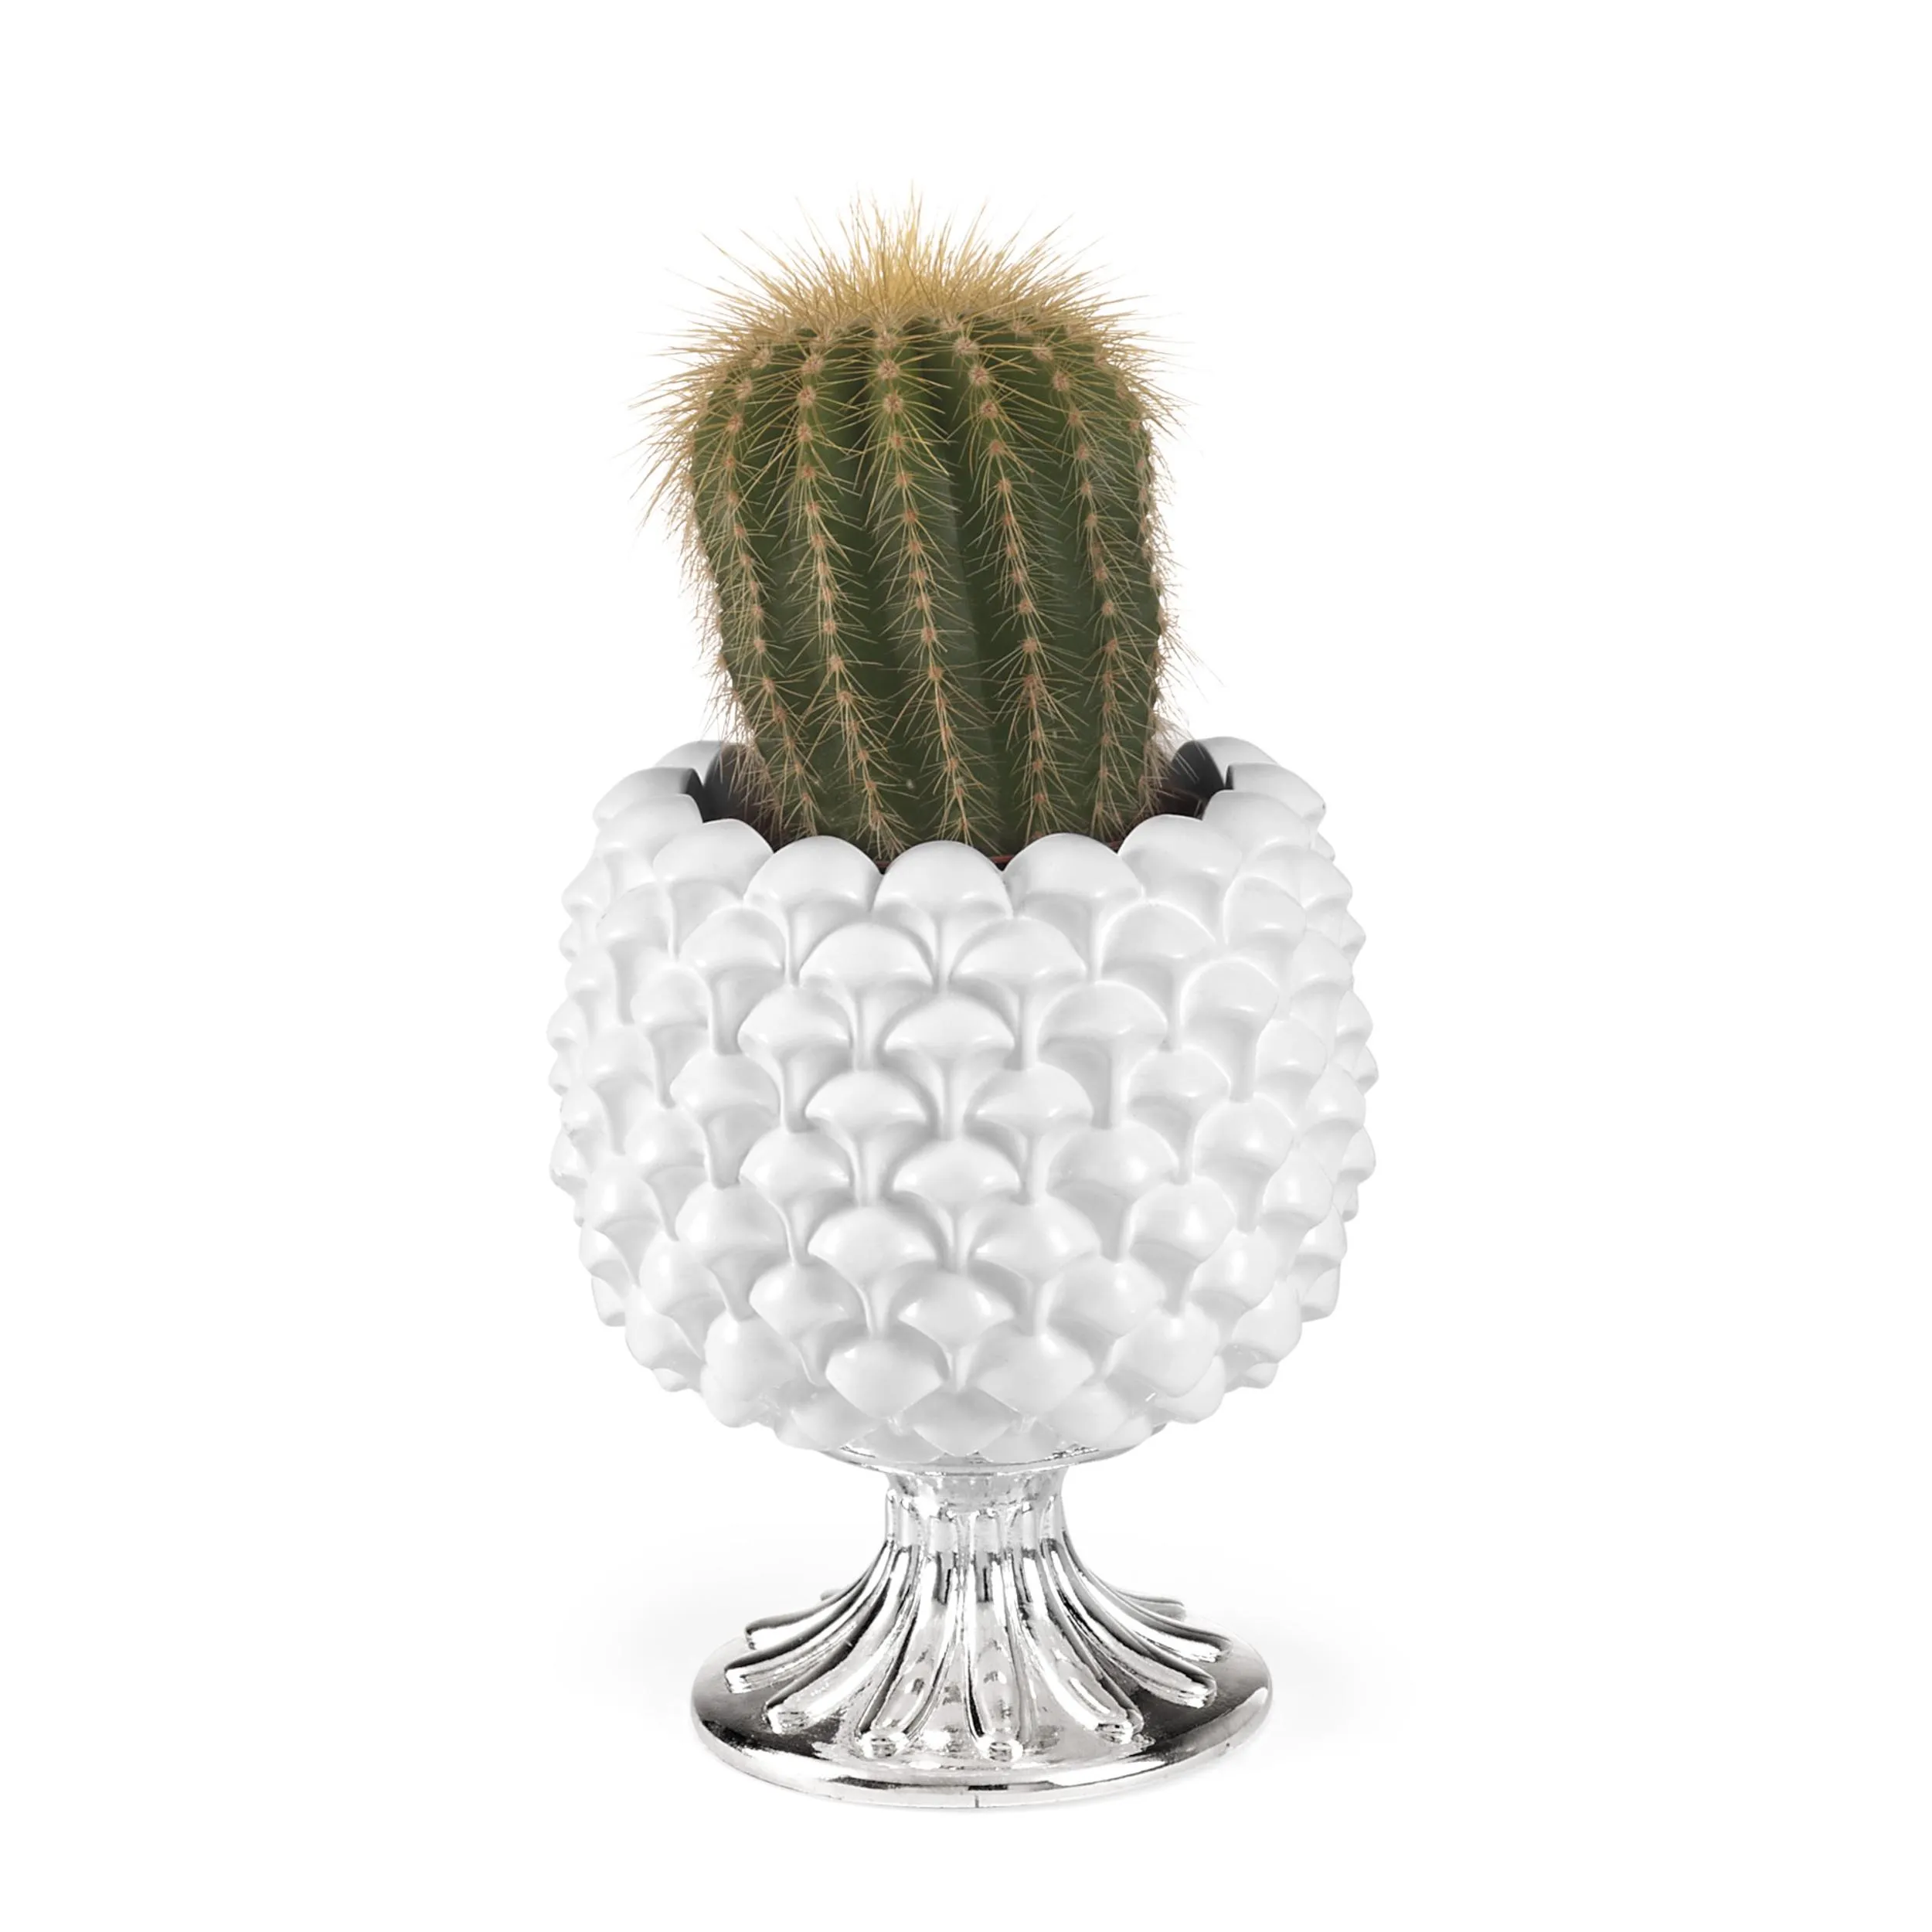 Vaso con pianta base Argento, Pigne bianca diametro 8xh10,5 cm in scatola regalo, regalo